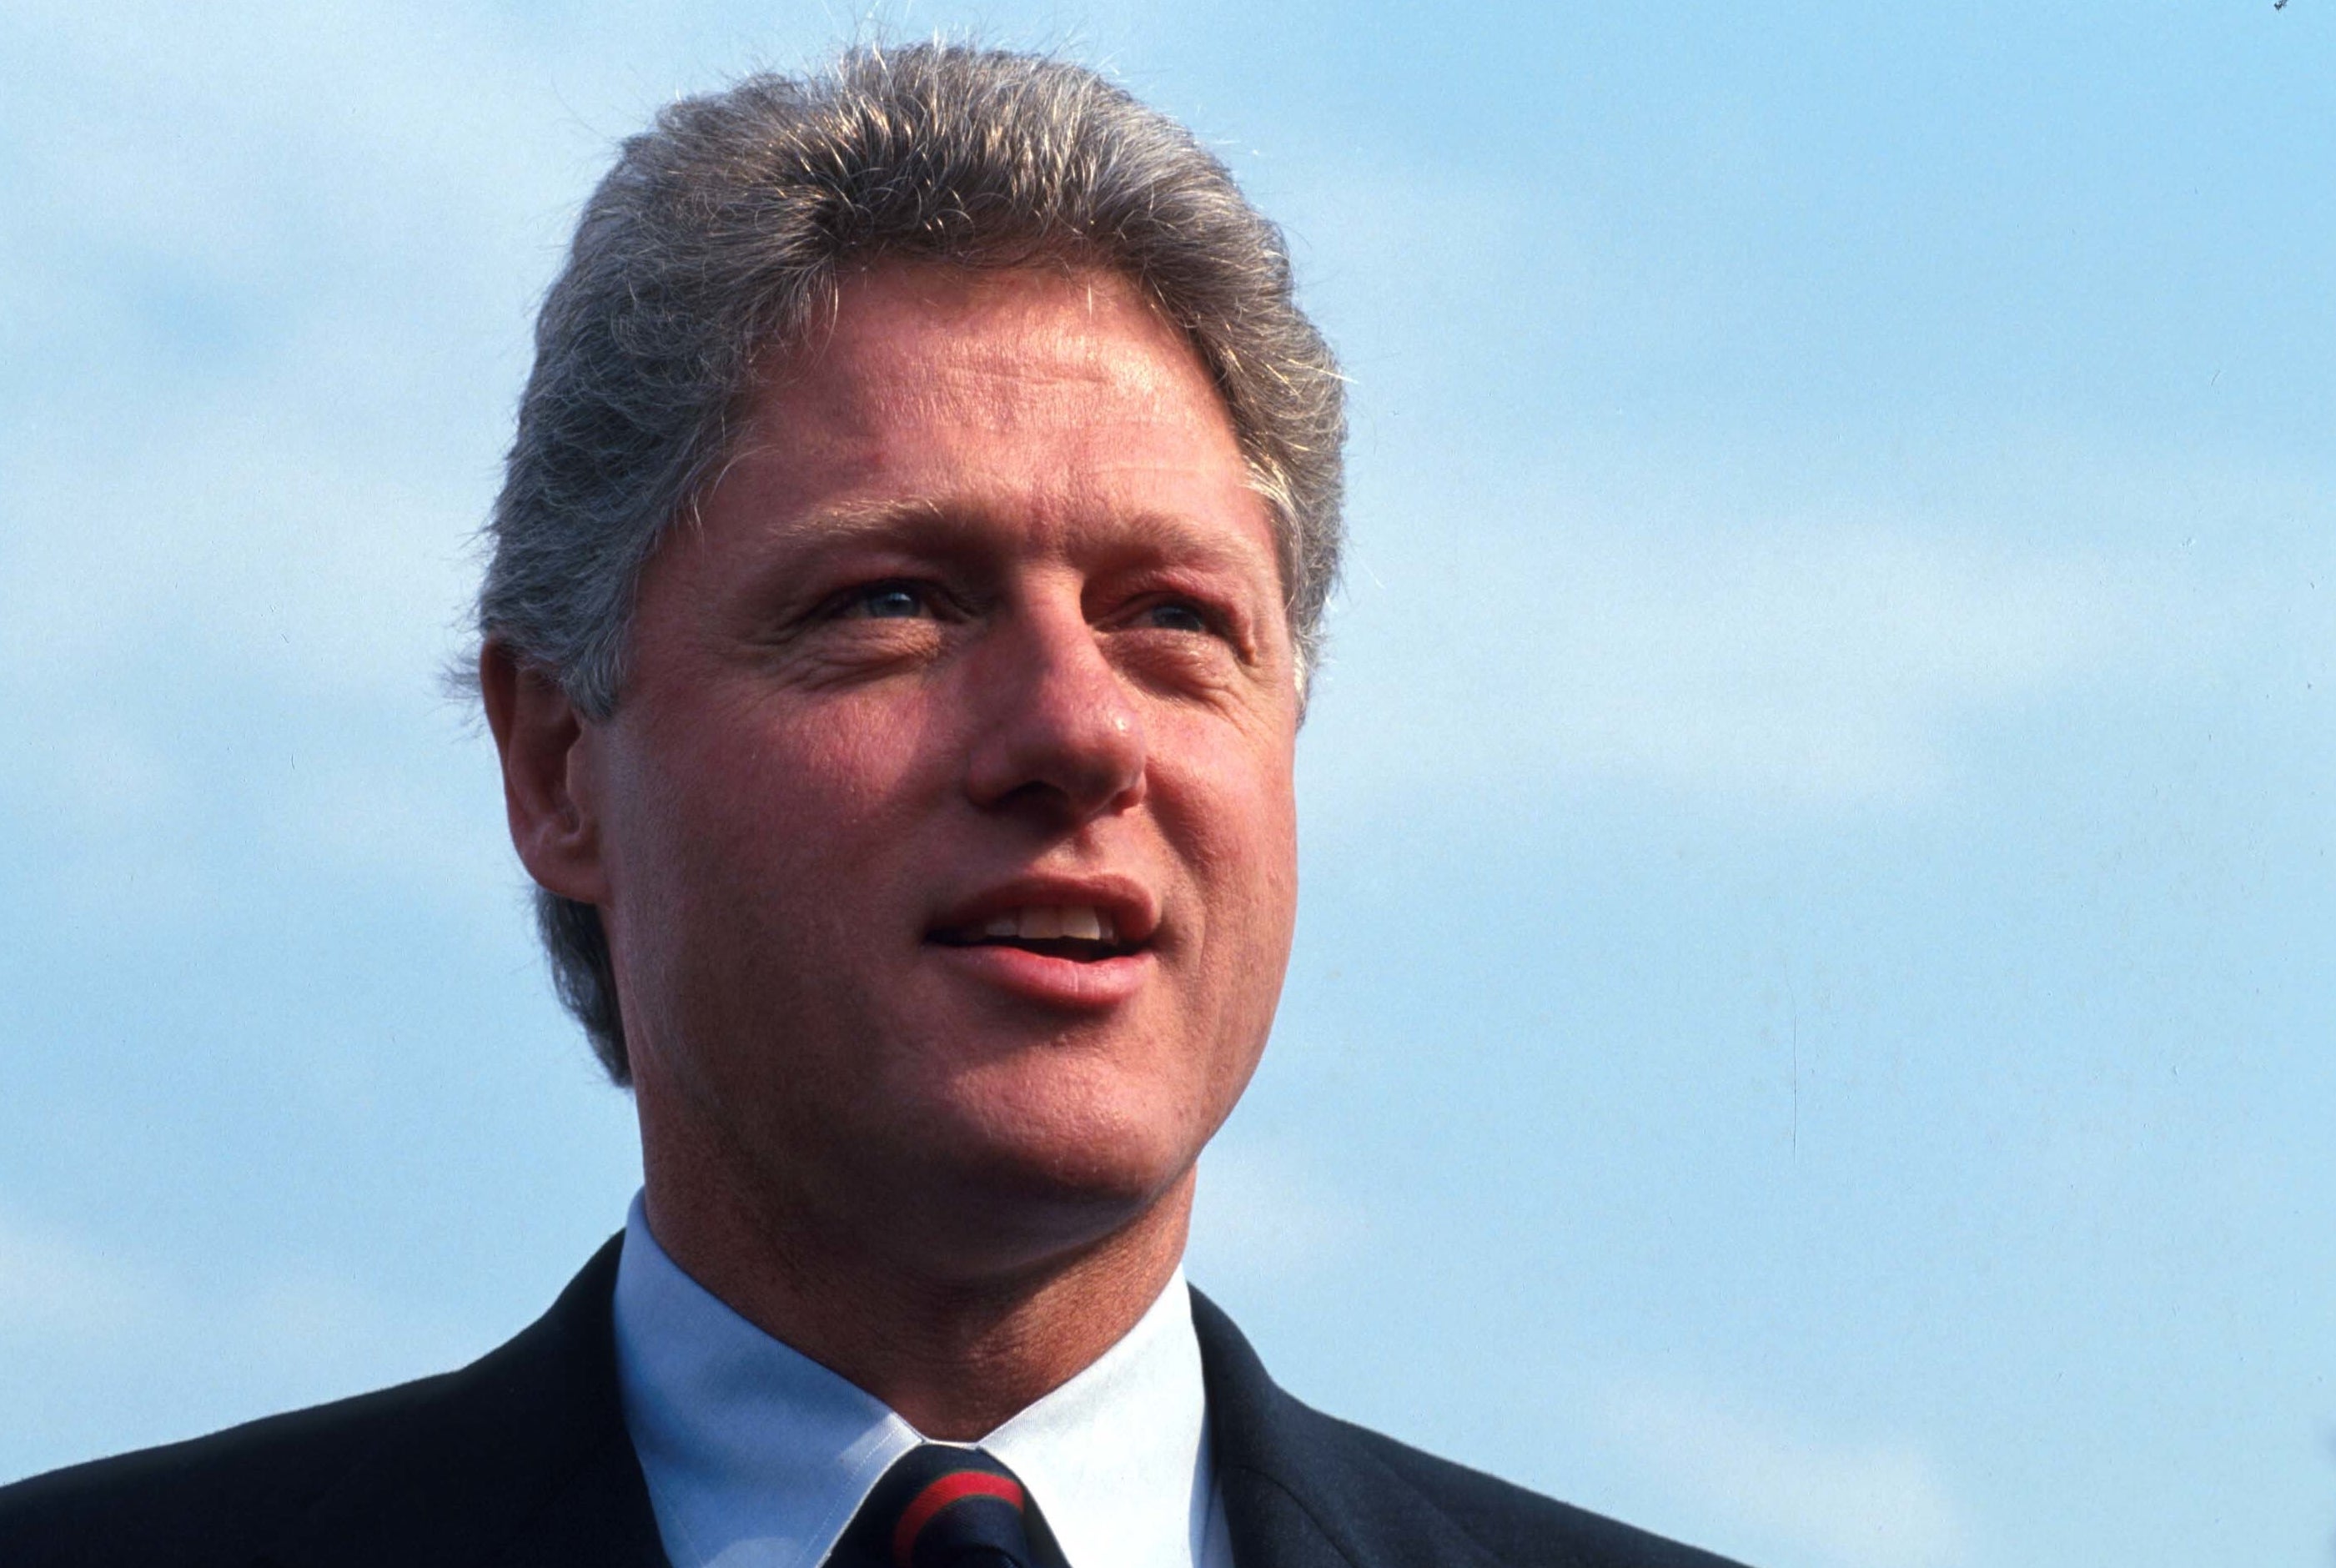 Bill Clinton headshot